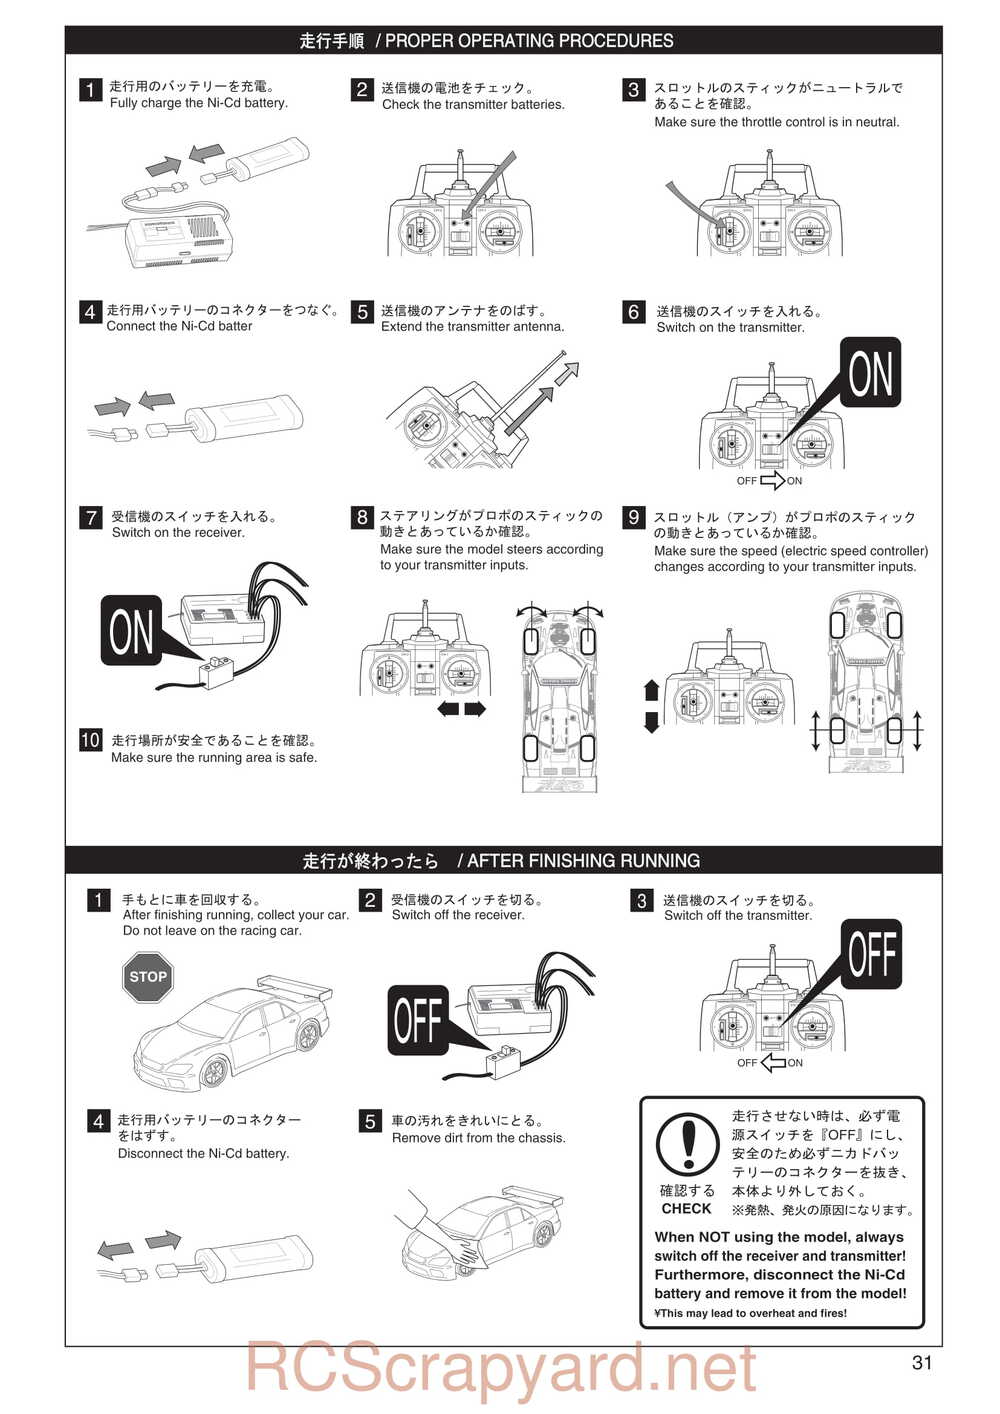 Kyosho - 30101 - KX-One - Manual - Page 31